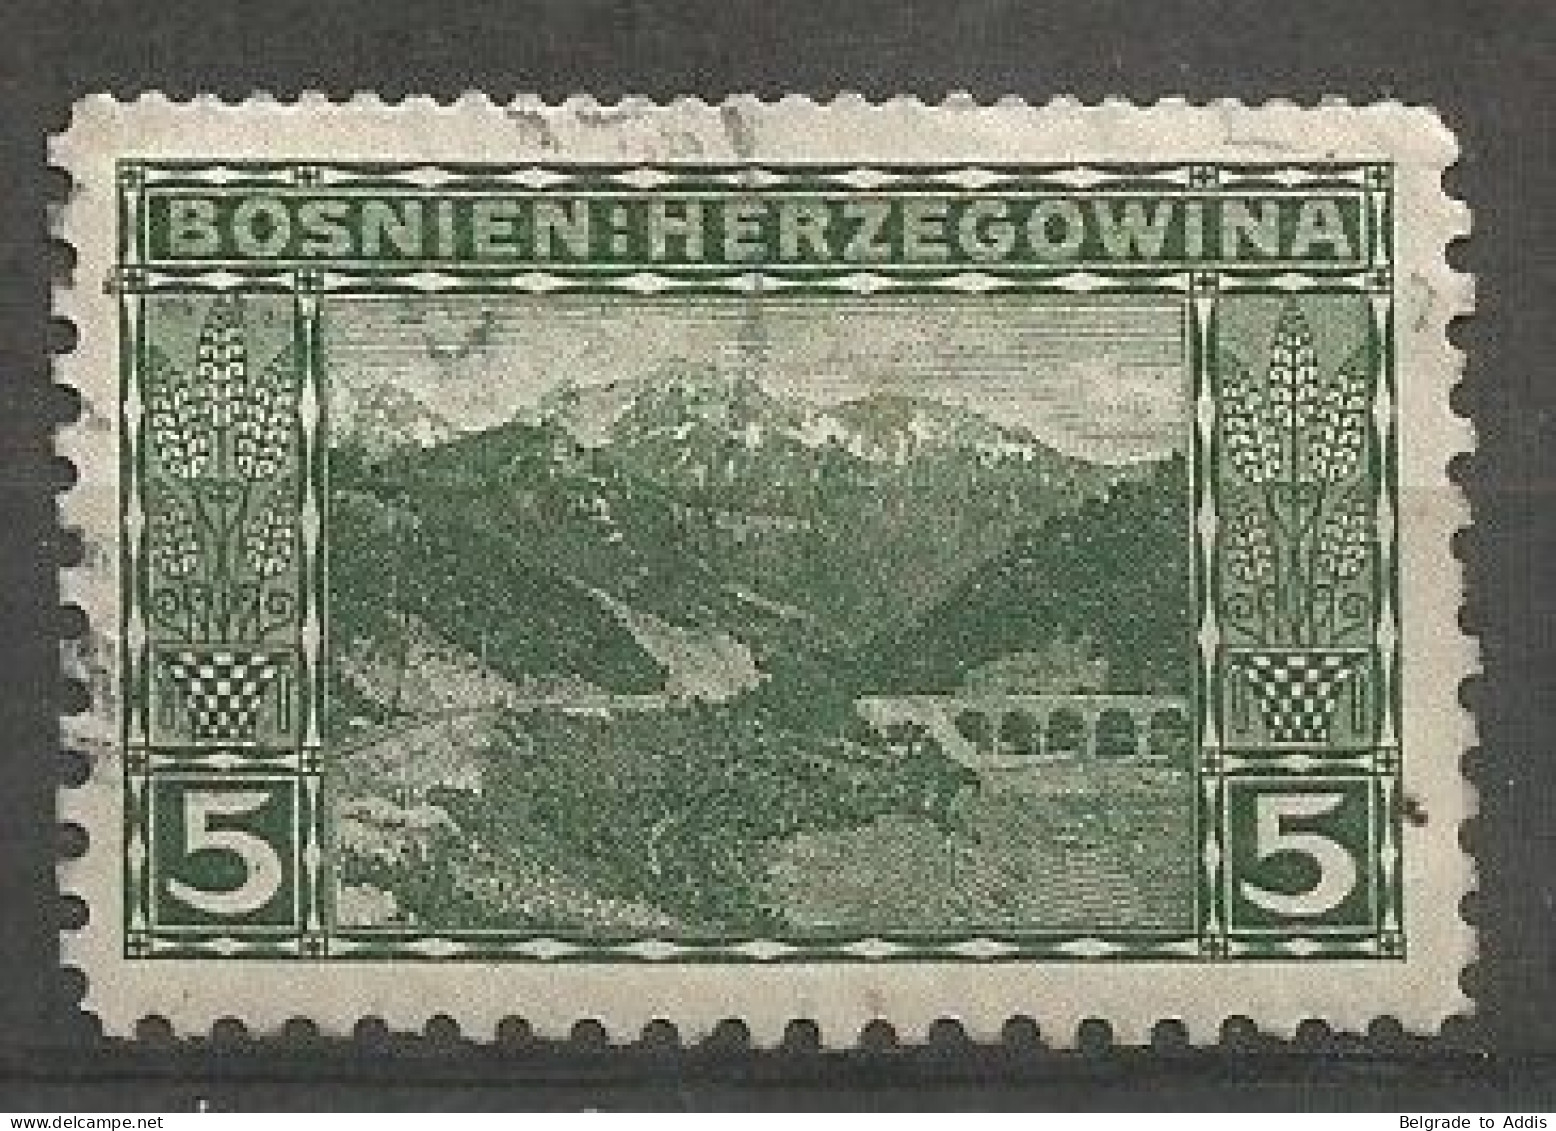 Bosnia Bosnien K.u.K. Austria Hungary Mi.32 Perforation 12½:9¼:9¼:9¼ Coleman 3222 Used 1906 - Bosnien-Herzegowina